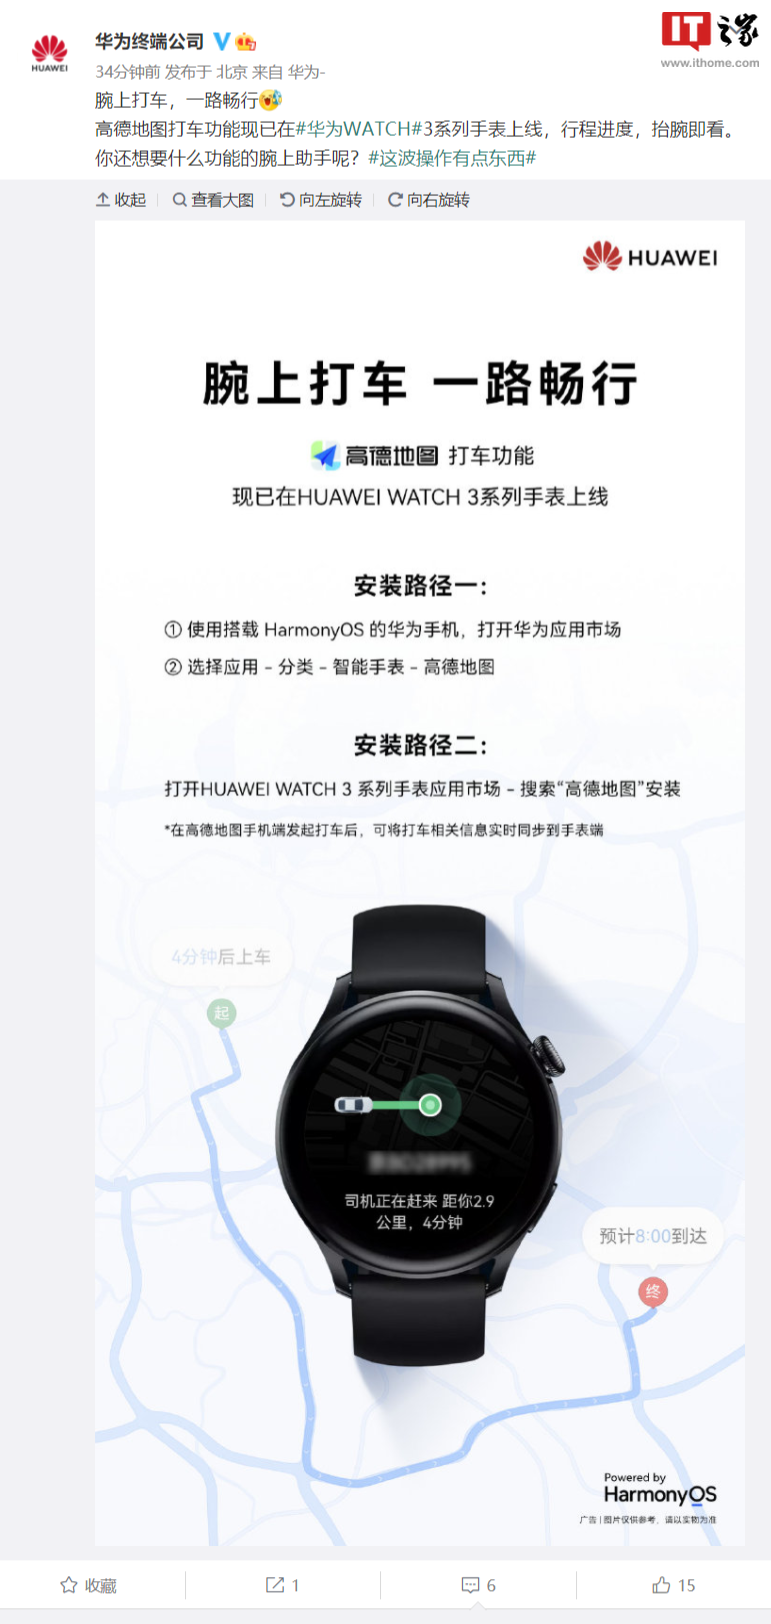 Huawei Watch 3 series watches get AutoNavi map taxi function